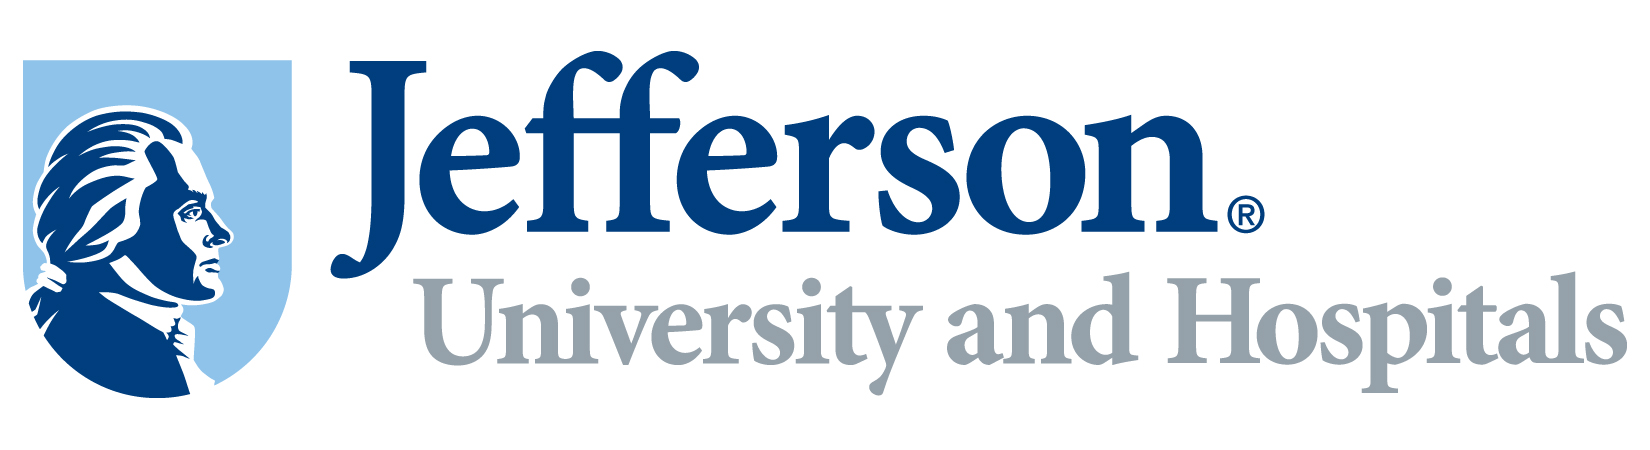 Jefferson University and Hospitals logo.